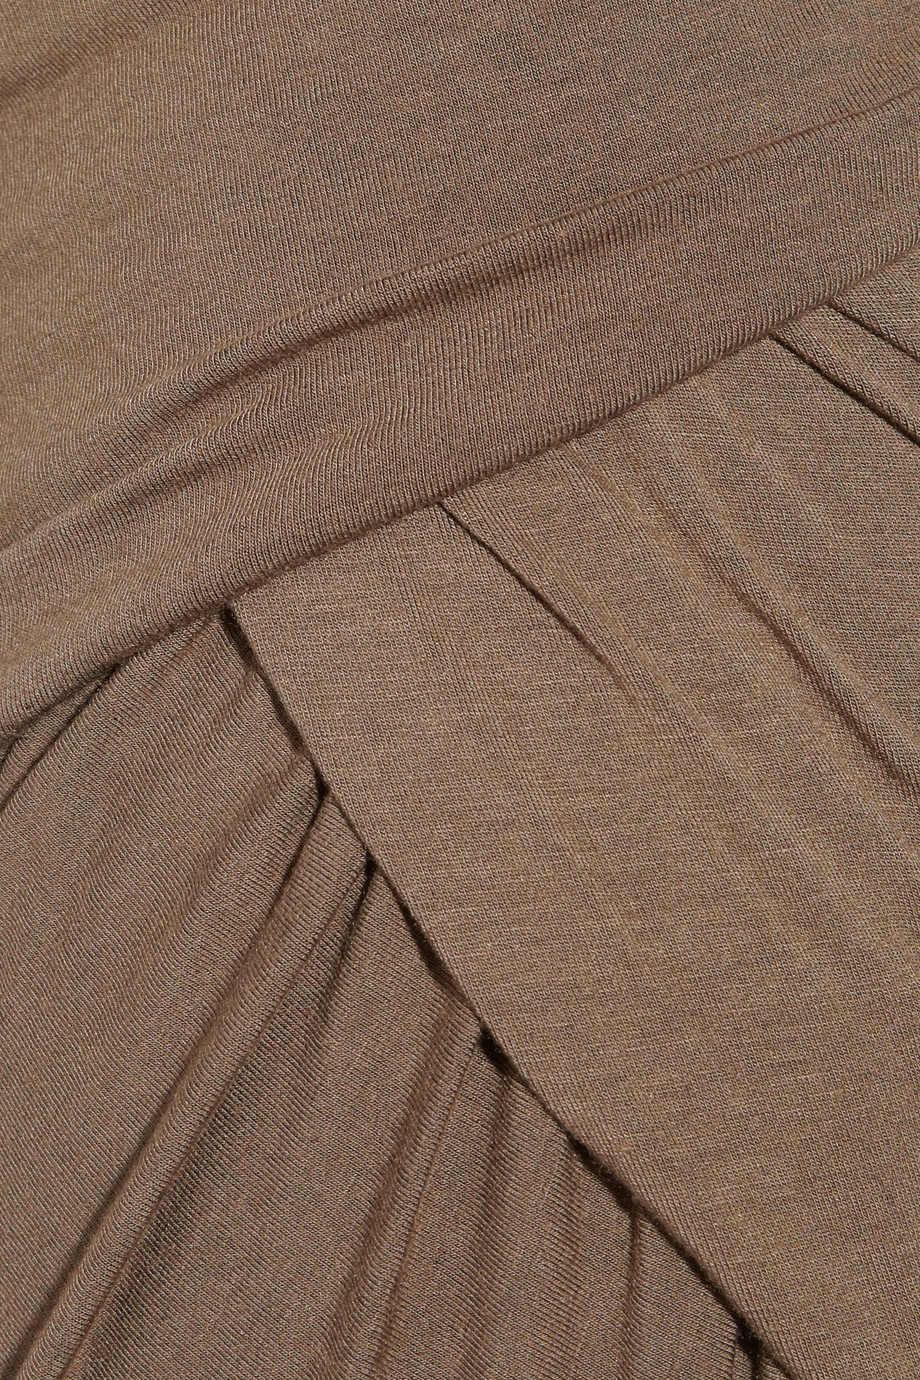 Donna karan Stretch-jersey Pencil Skirt in Brown | Lyst